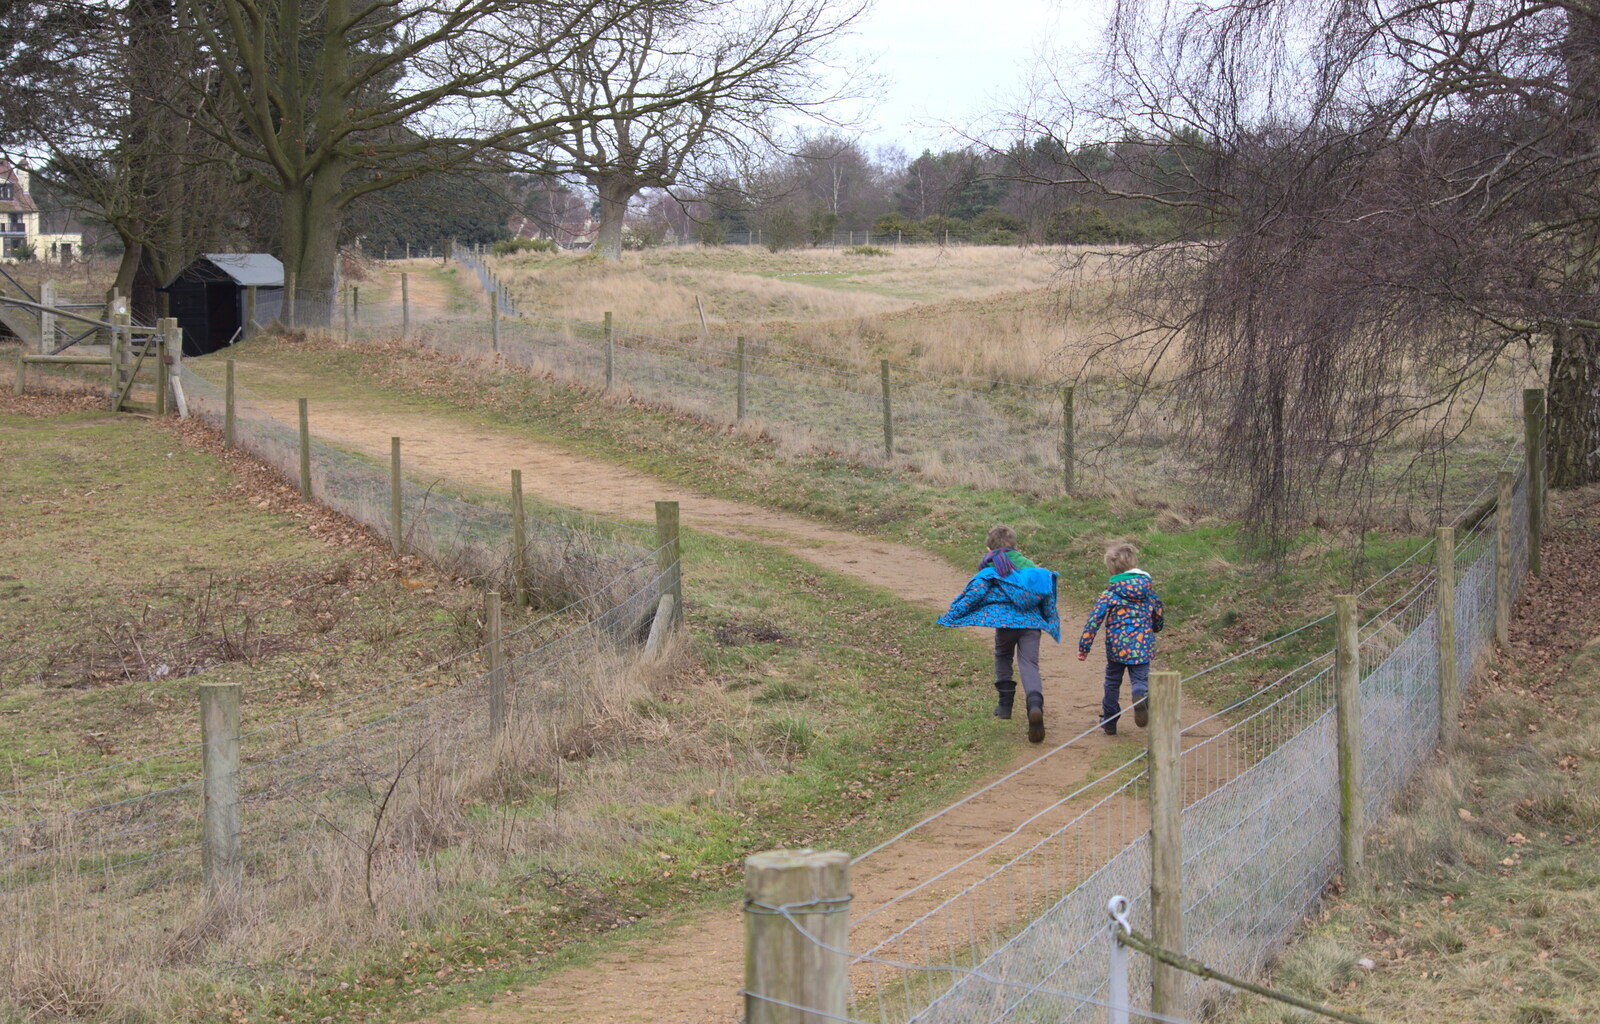 The boys run along a path from A Trip to Sutton Hoo, Woodbridge, Suffolk - 29th January 2017